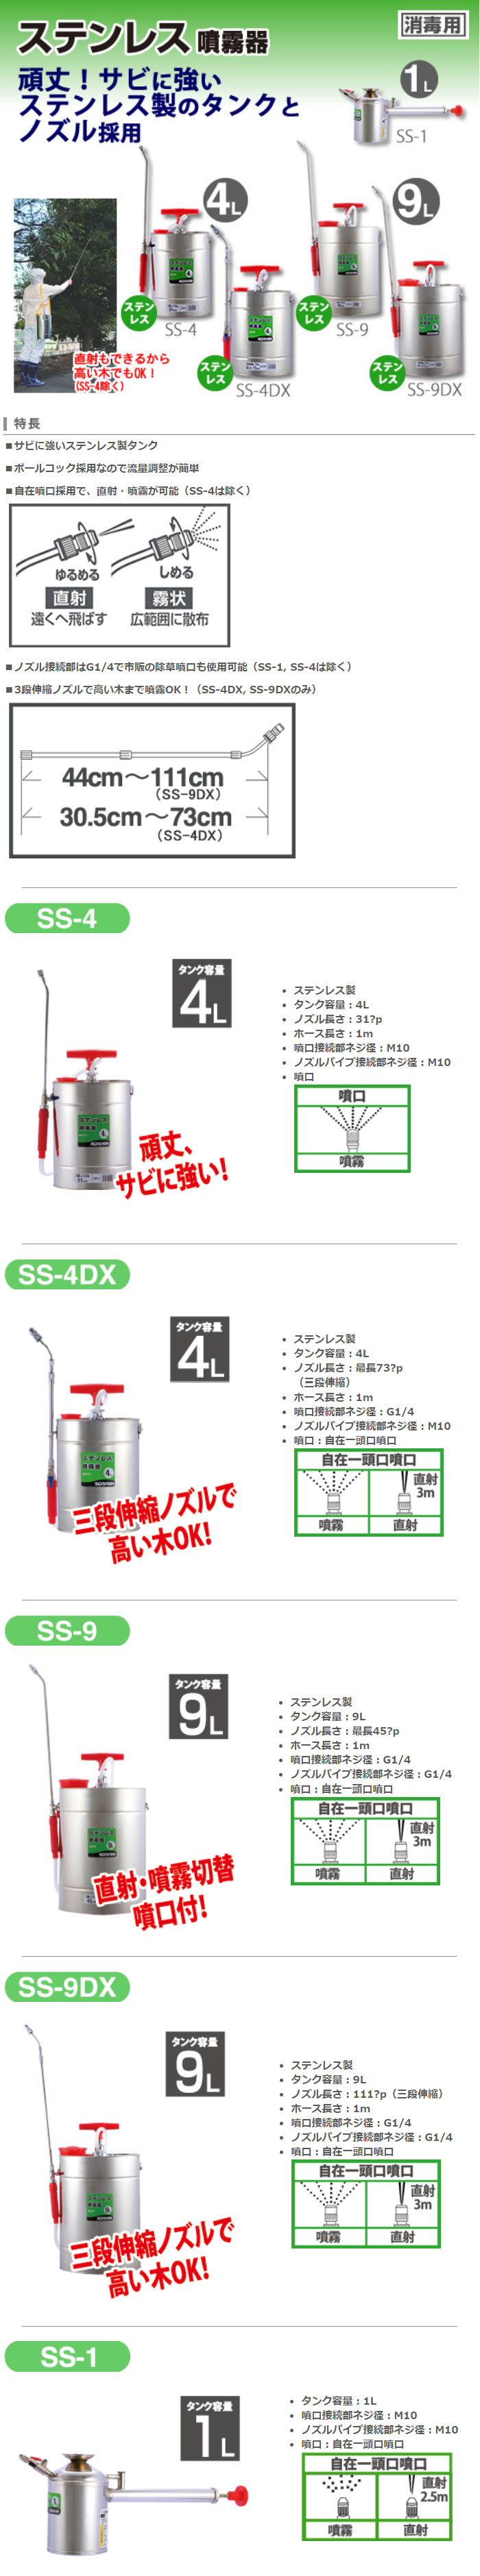 ステンレス噴霧器 SS-4DX(SS-4DX-AAA-1) SS-4DX | 株式会社工進【公式】